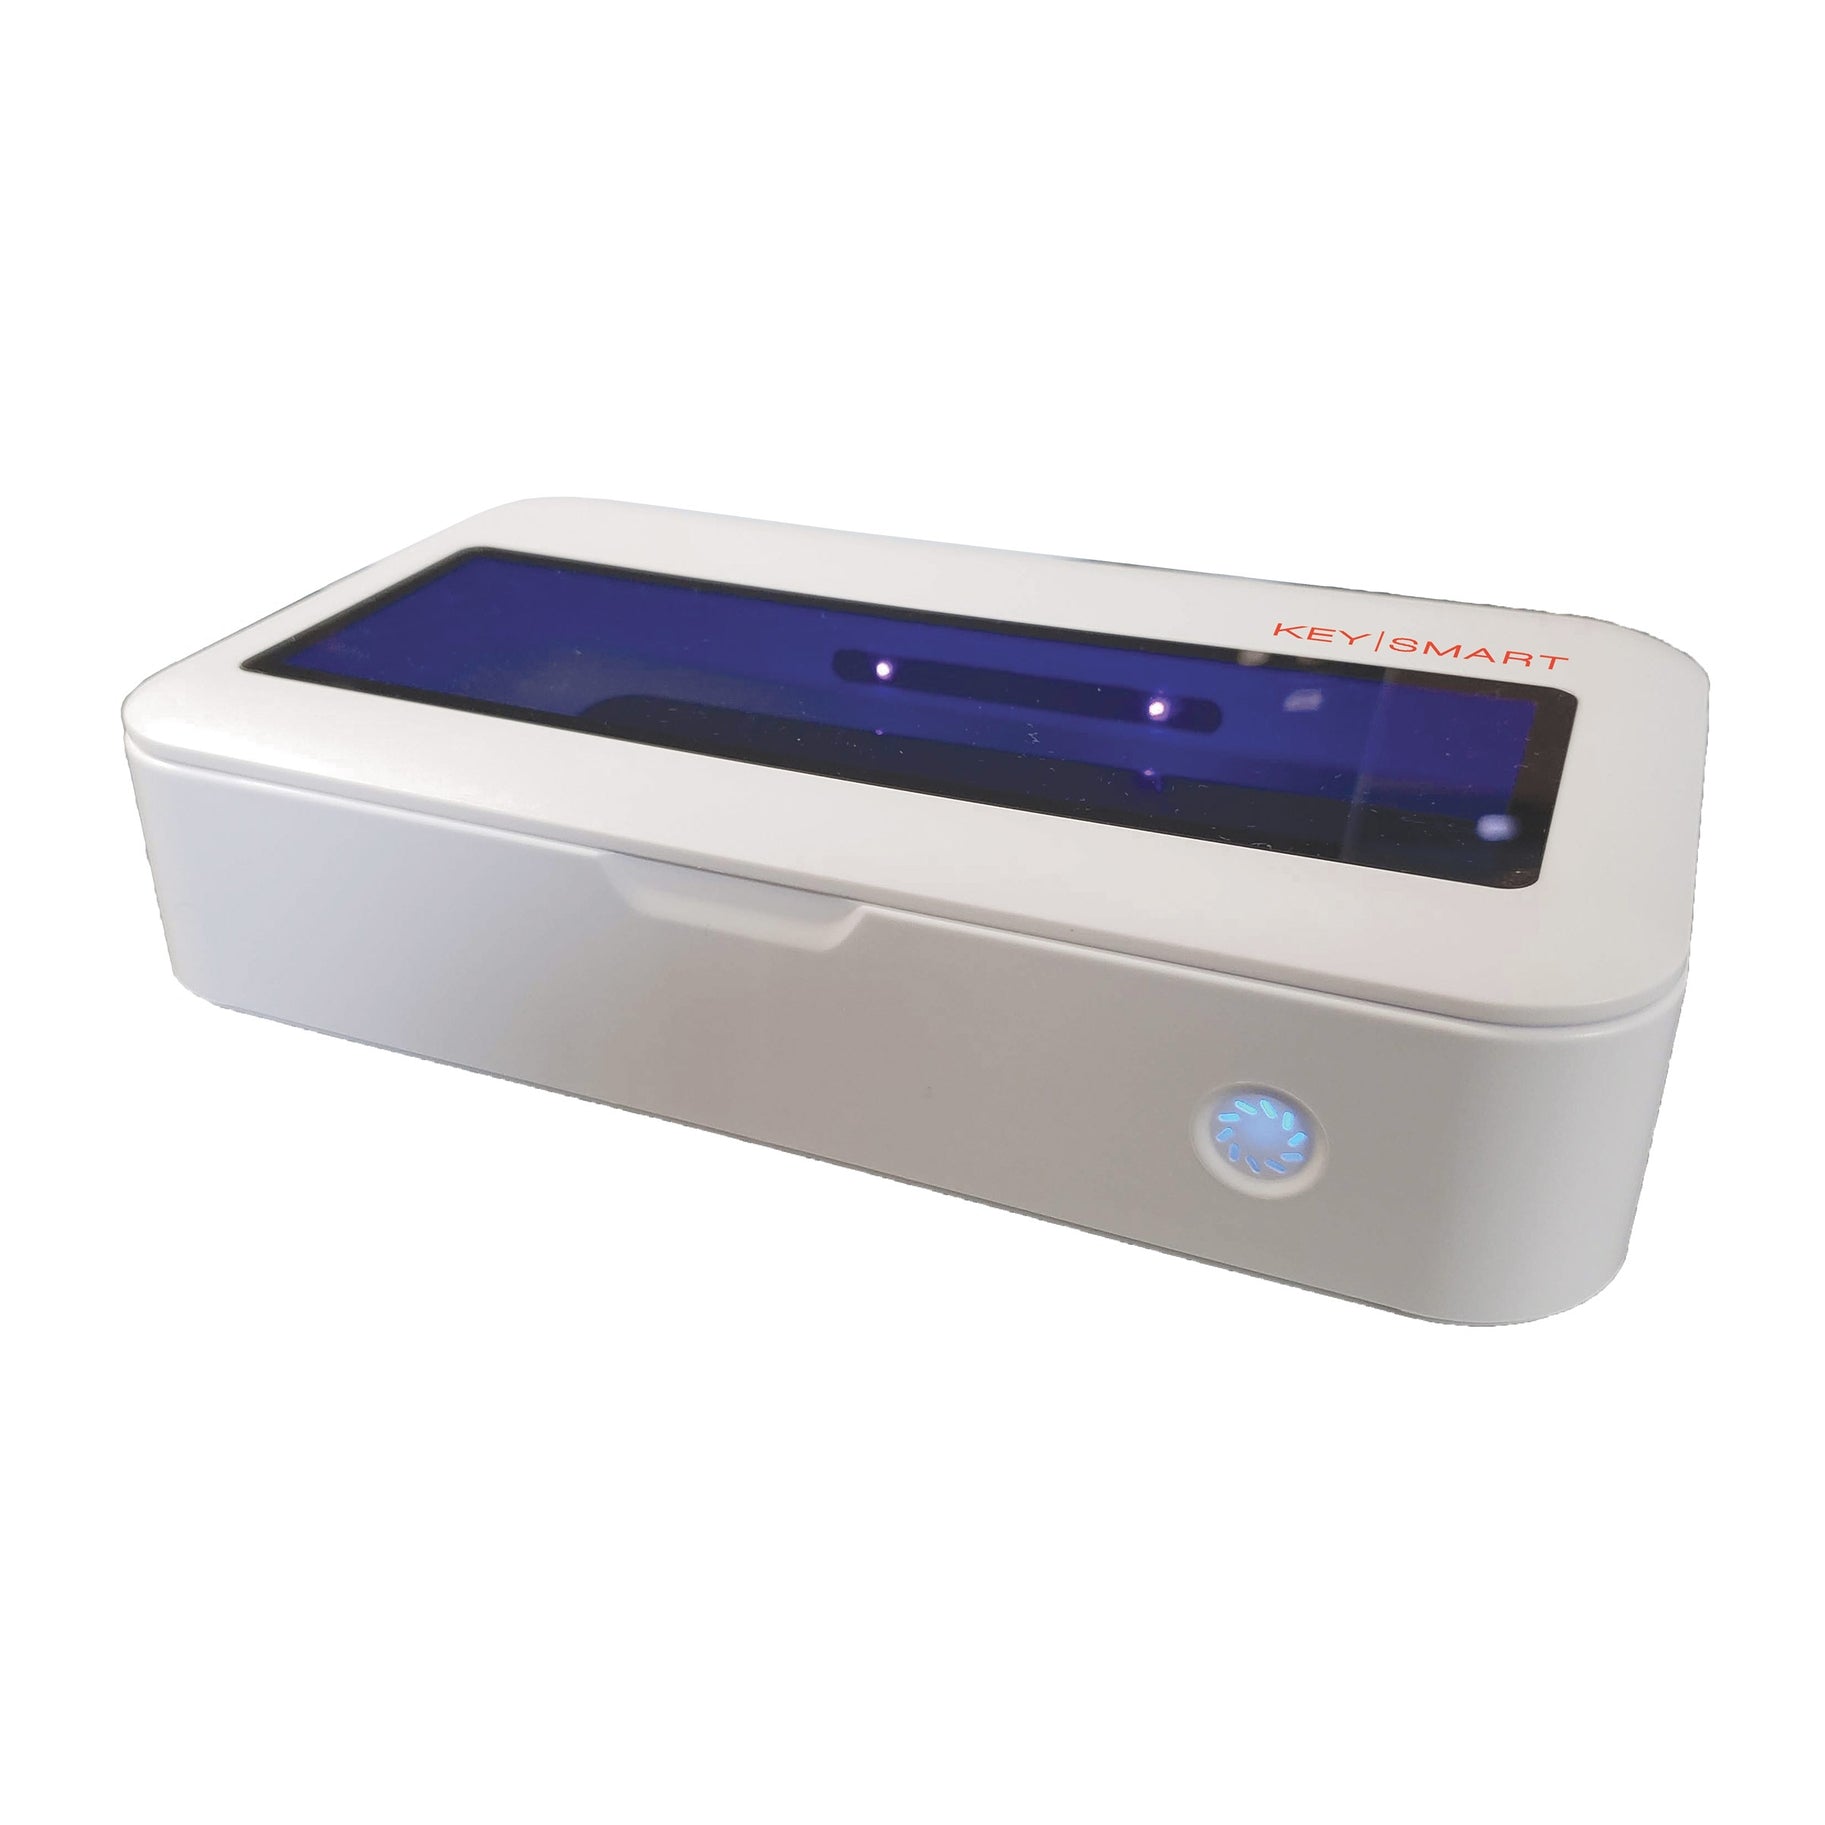 CleanTray UV Sterilization Charging Case